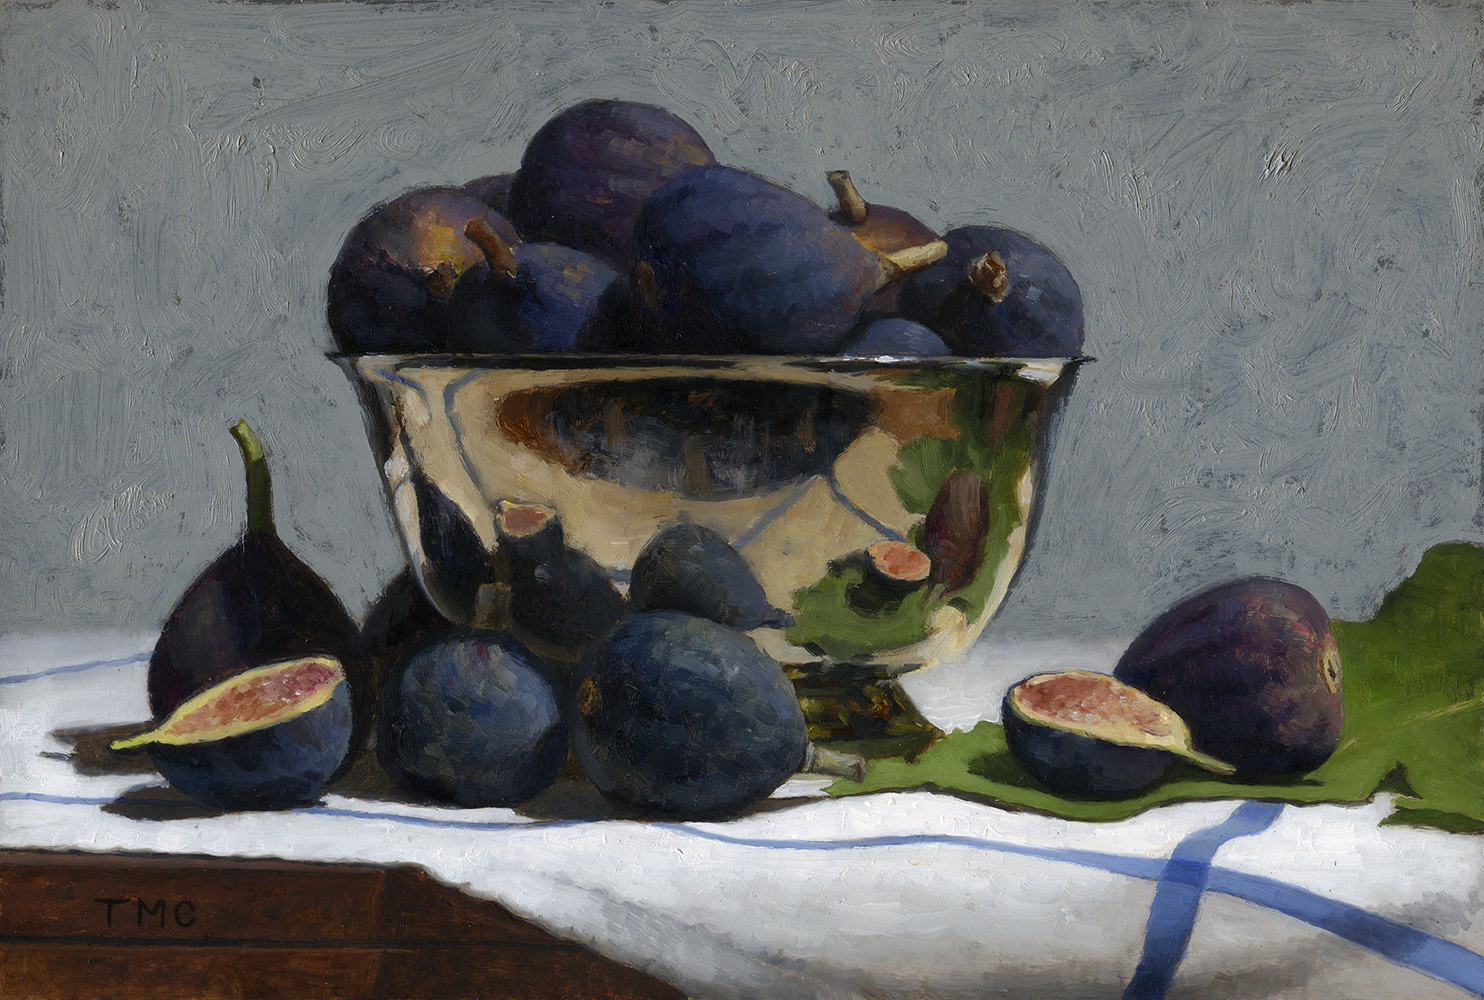 Figs - Todd M. Casey